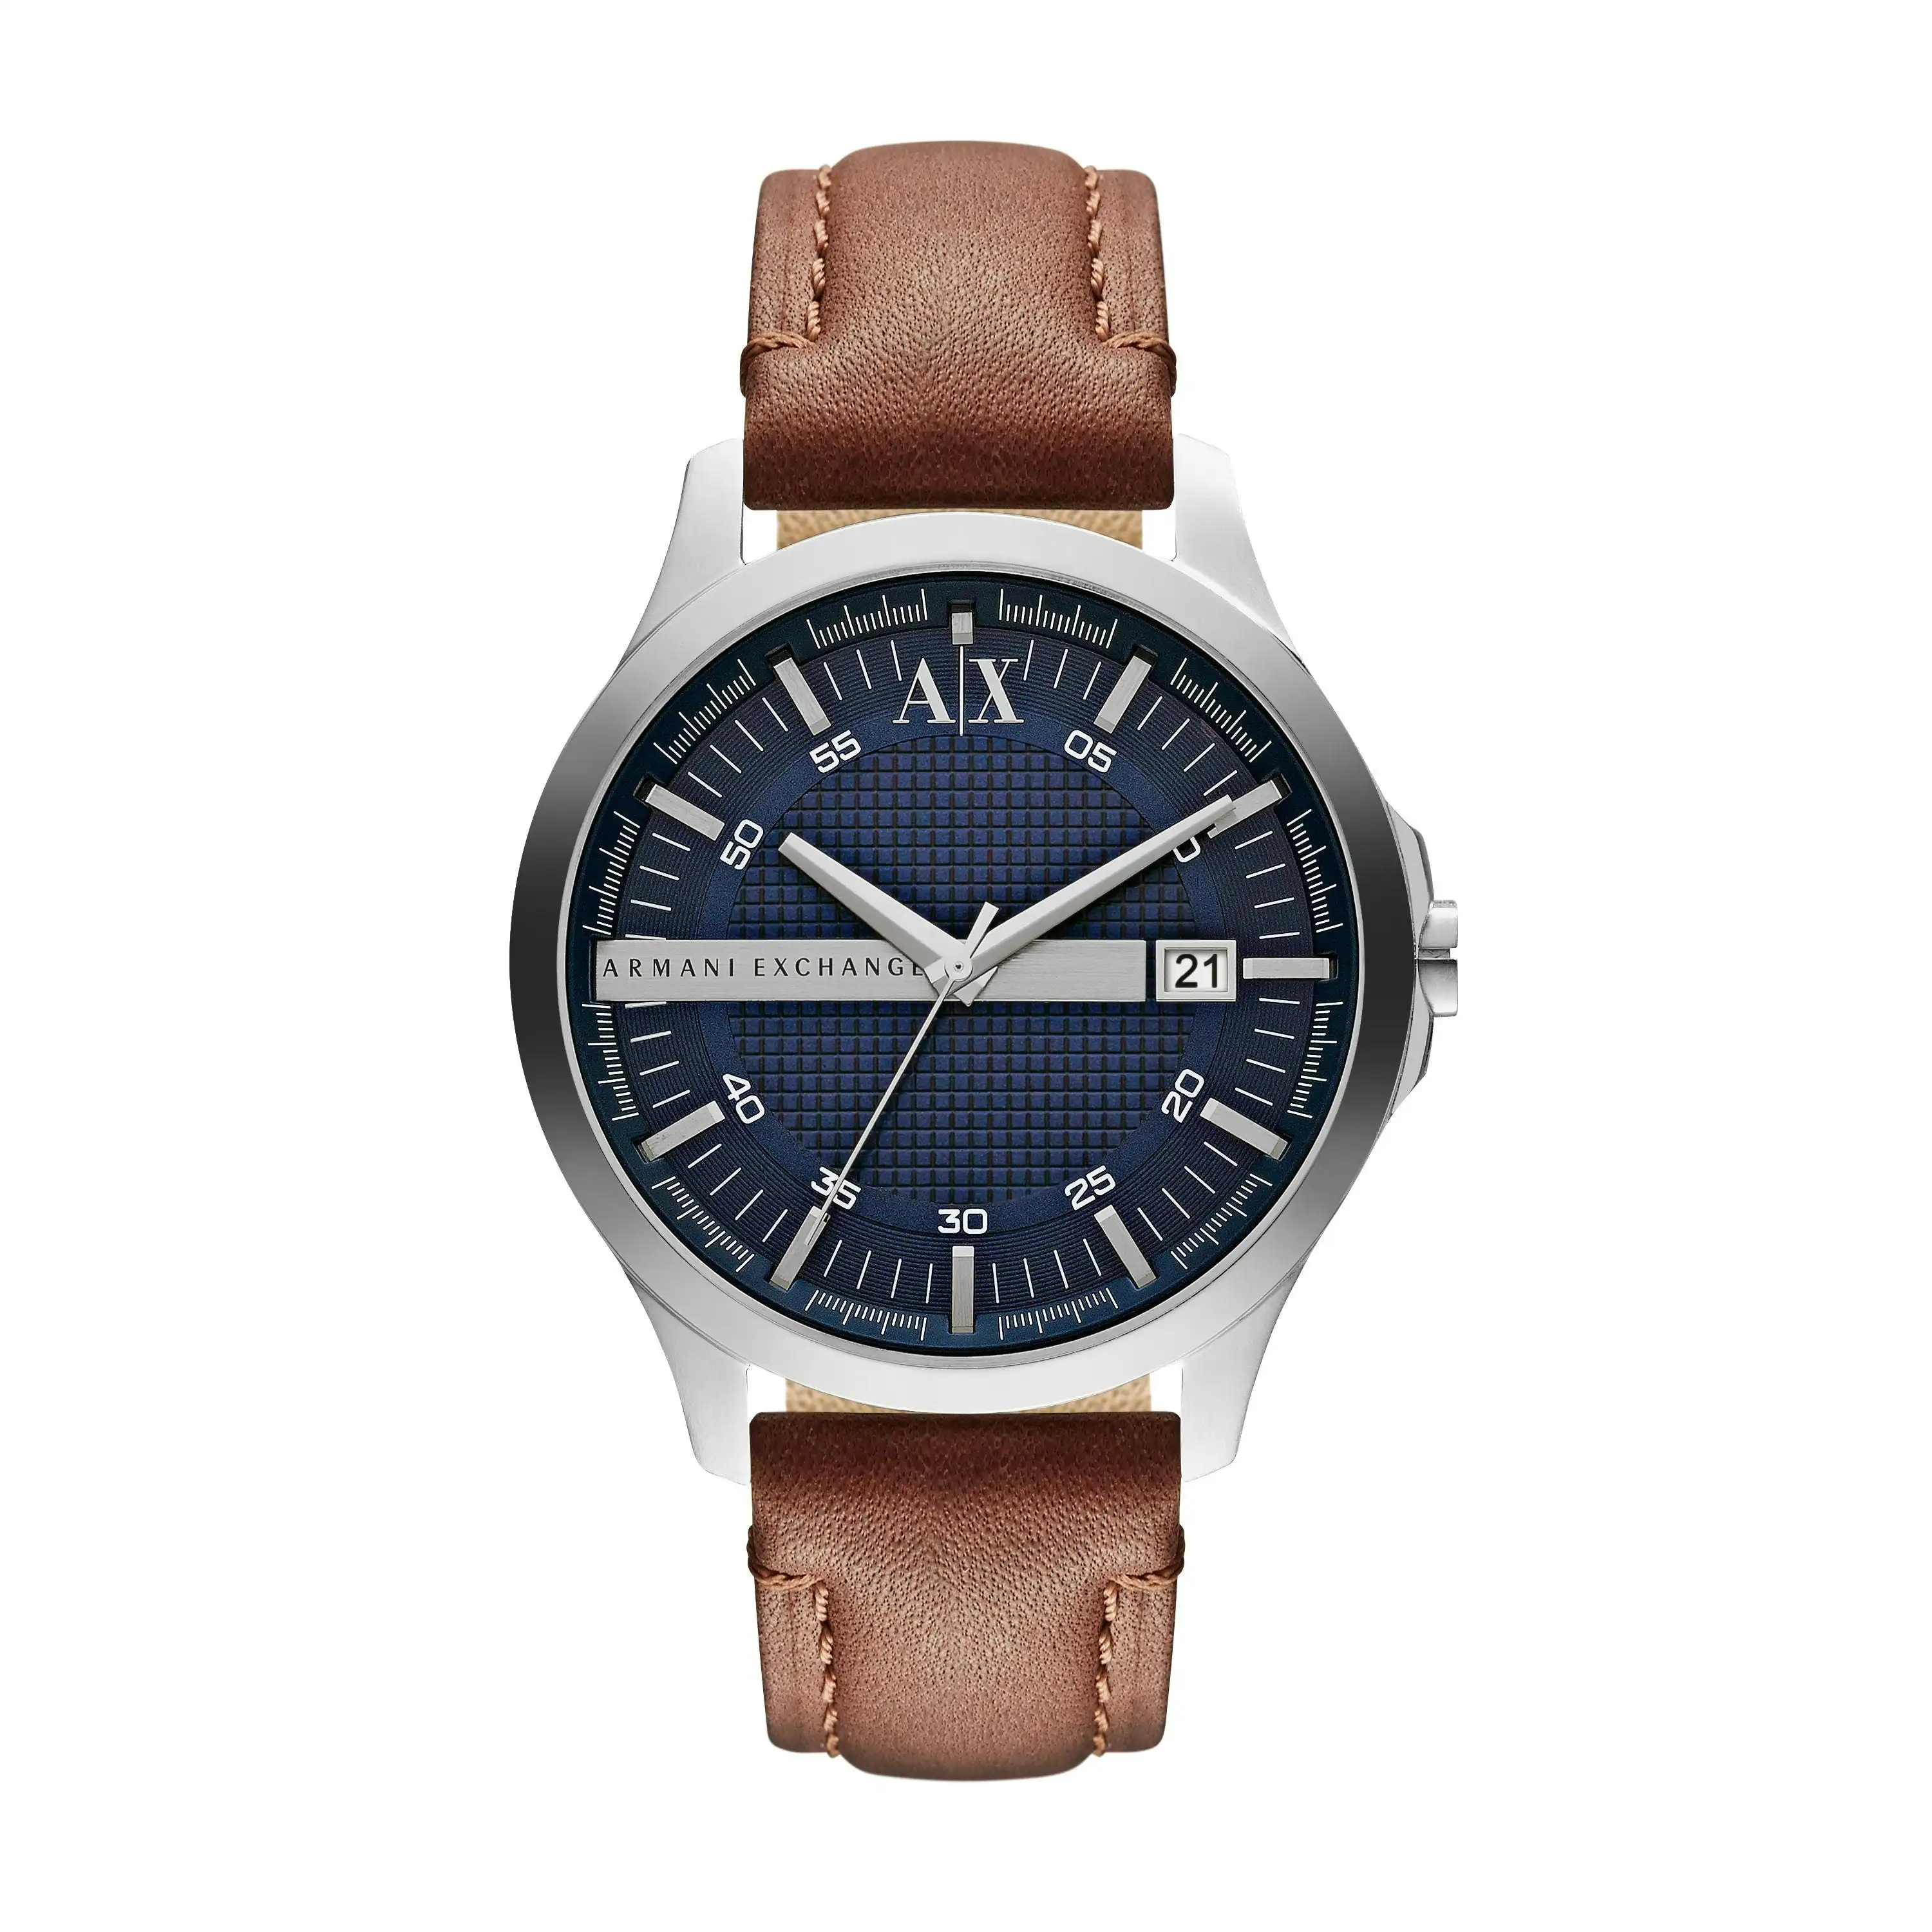 Armani Exchange AX2133 Men's Leather Watch